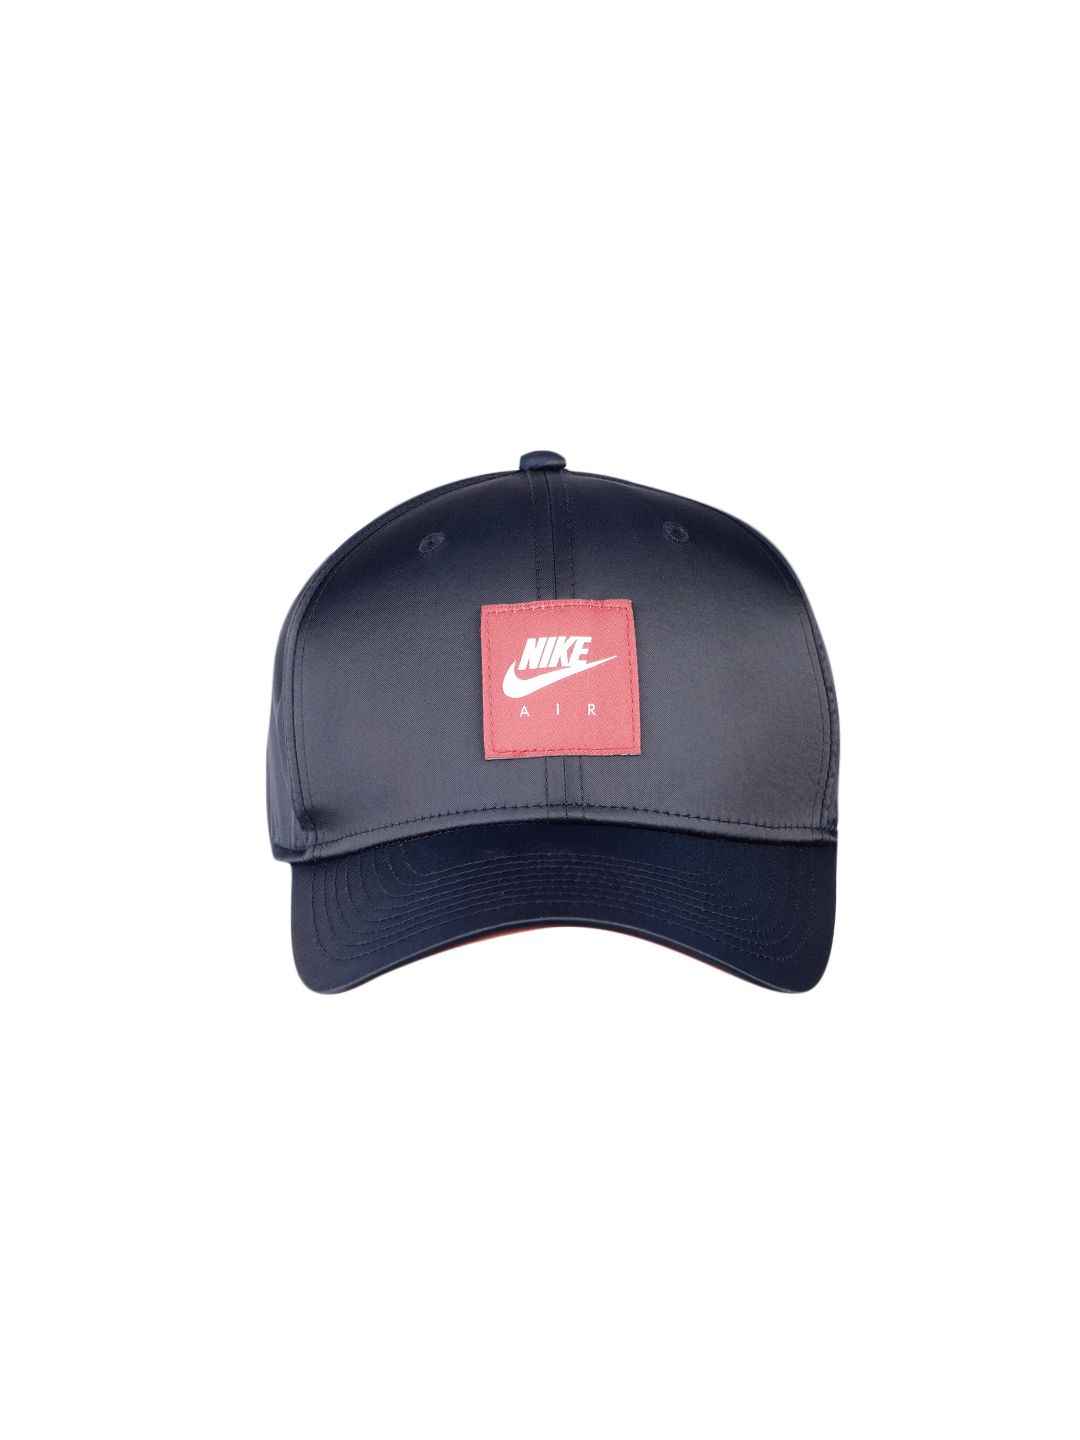 Nike Unisex Navy Blue Printed Snapback Cap Price in India